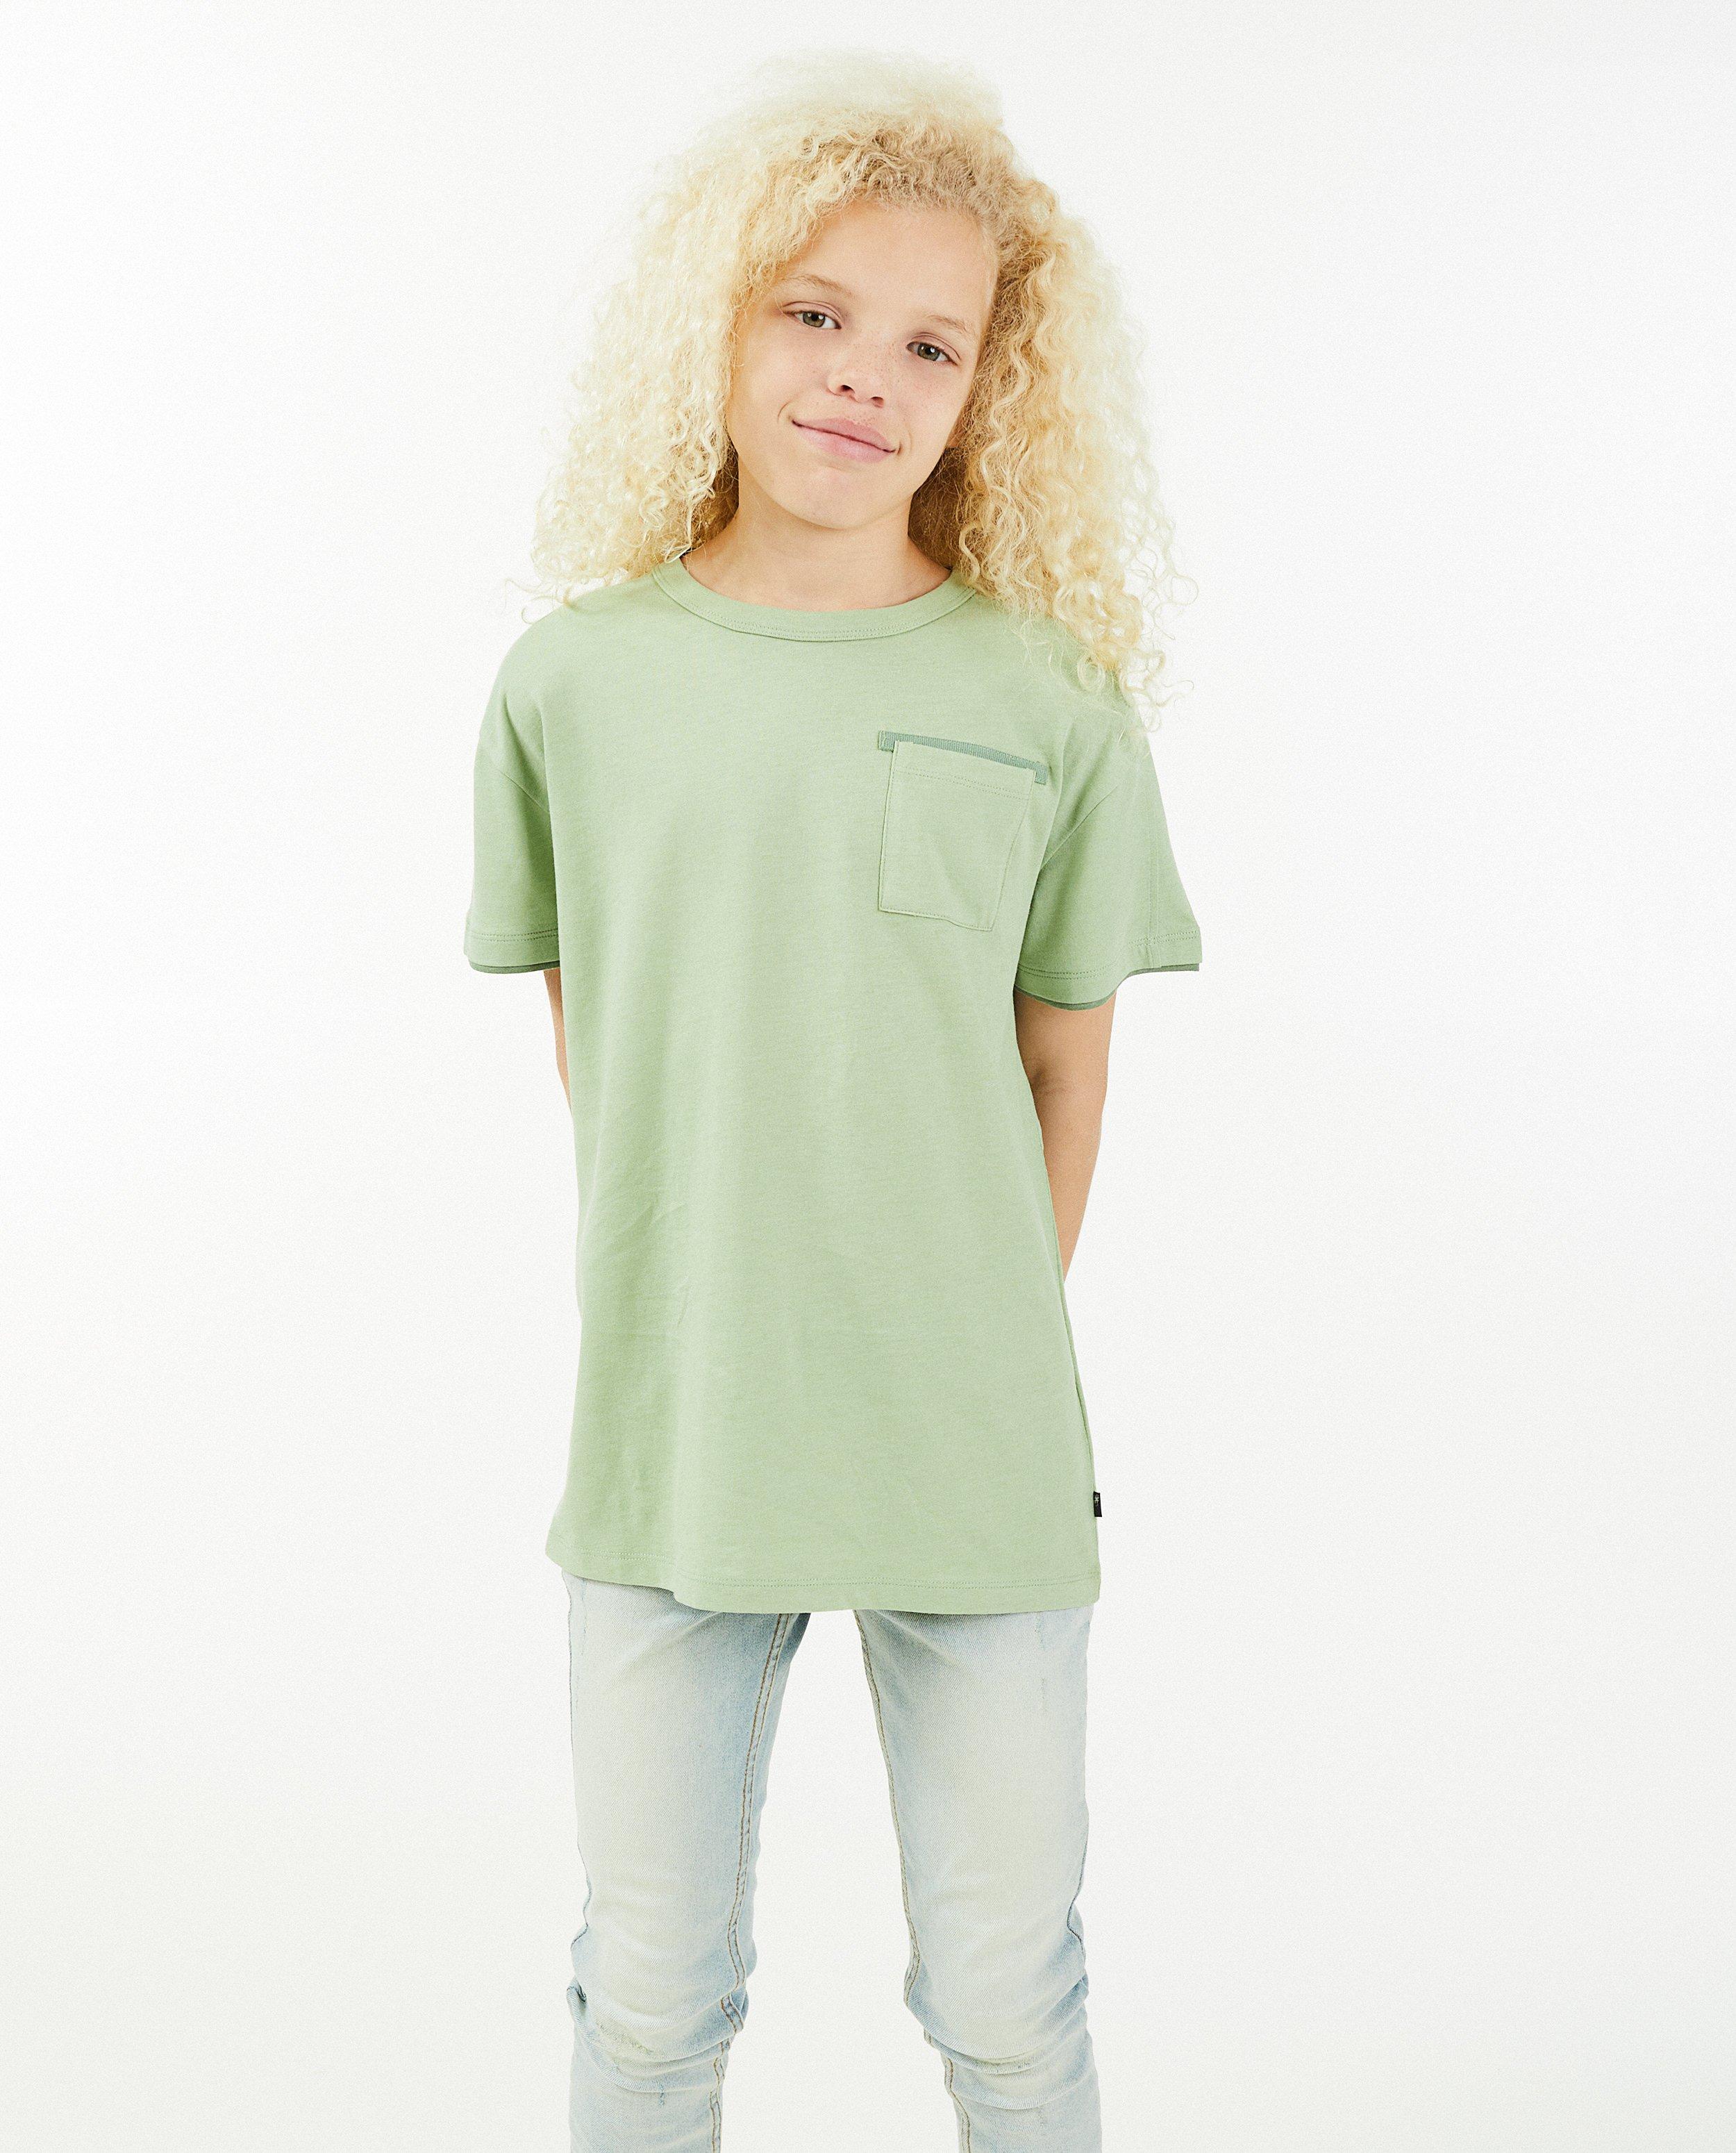 T-shirts - Groen T-shirt #LikeMe